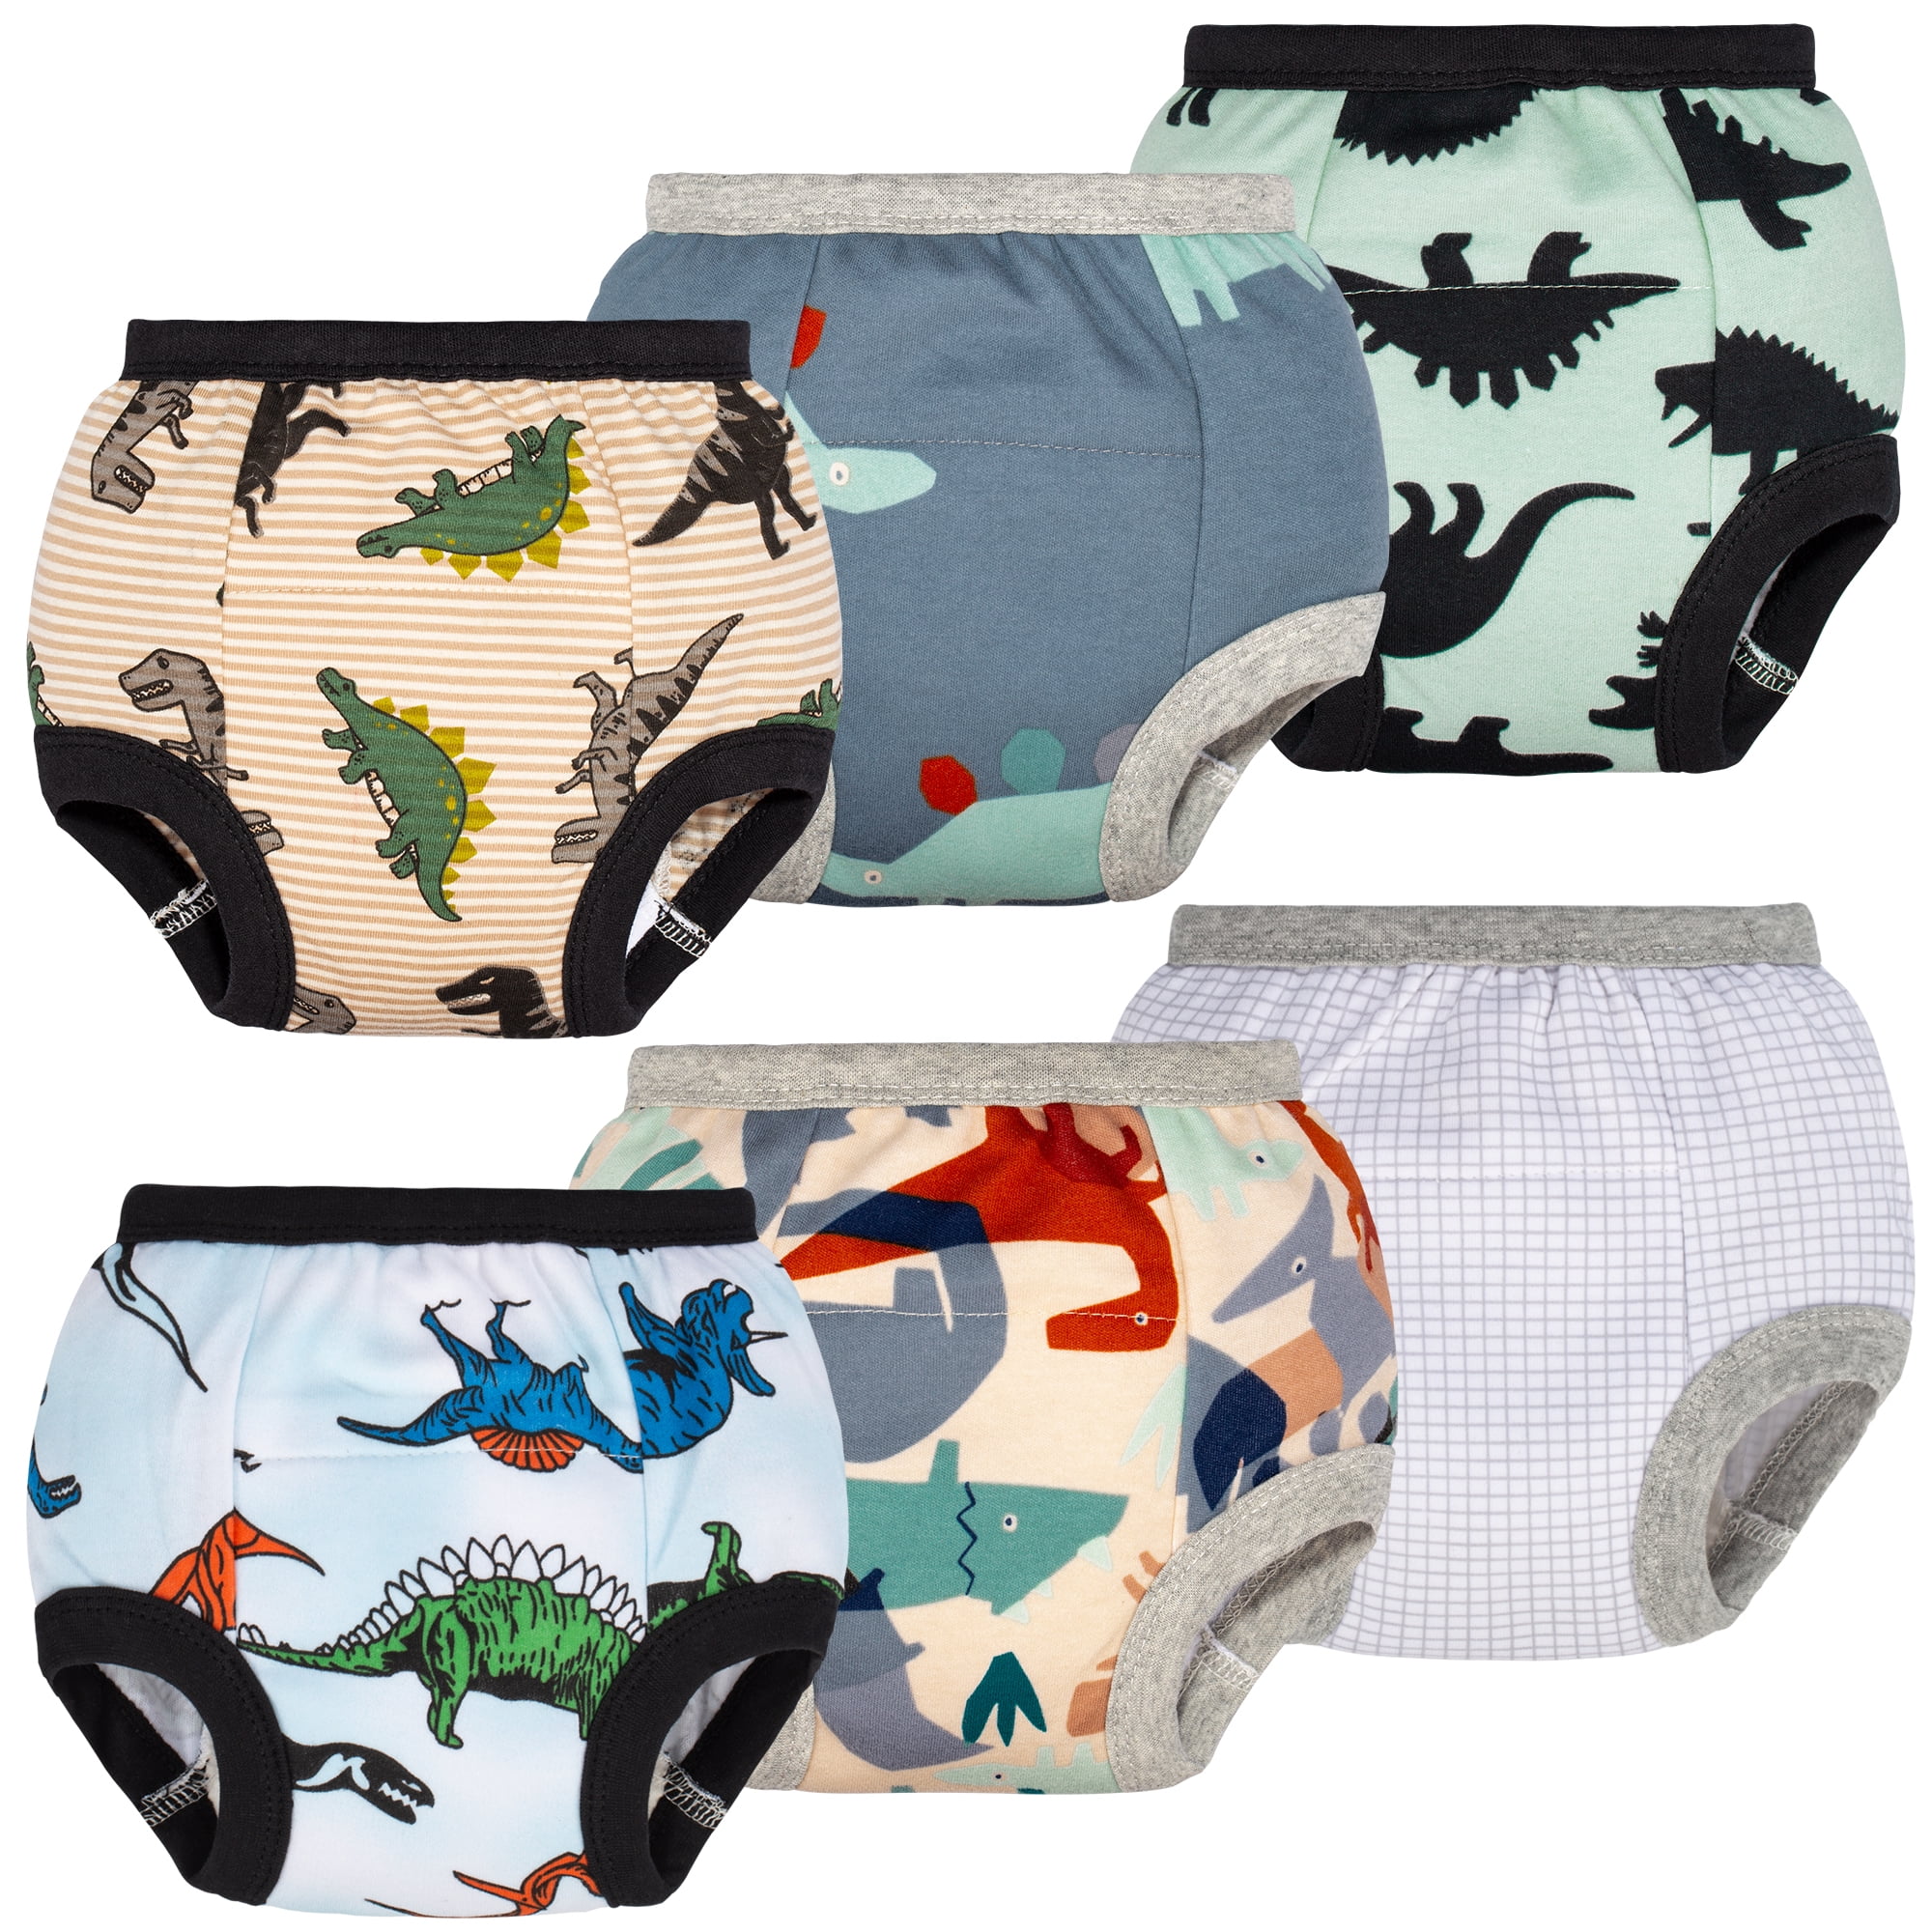 8 Packs Reusable Training Pants 3t-4t for Potty Training and Strong  Absorbent Toddler Potty Training Underwear Girls 3t